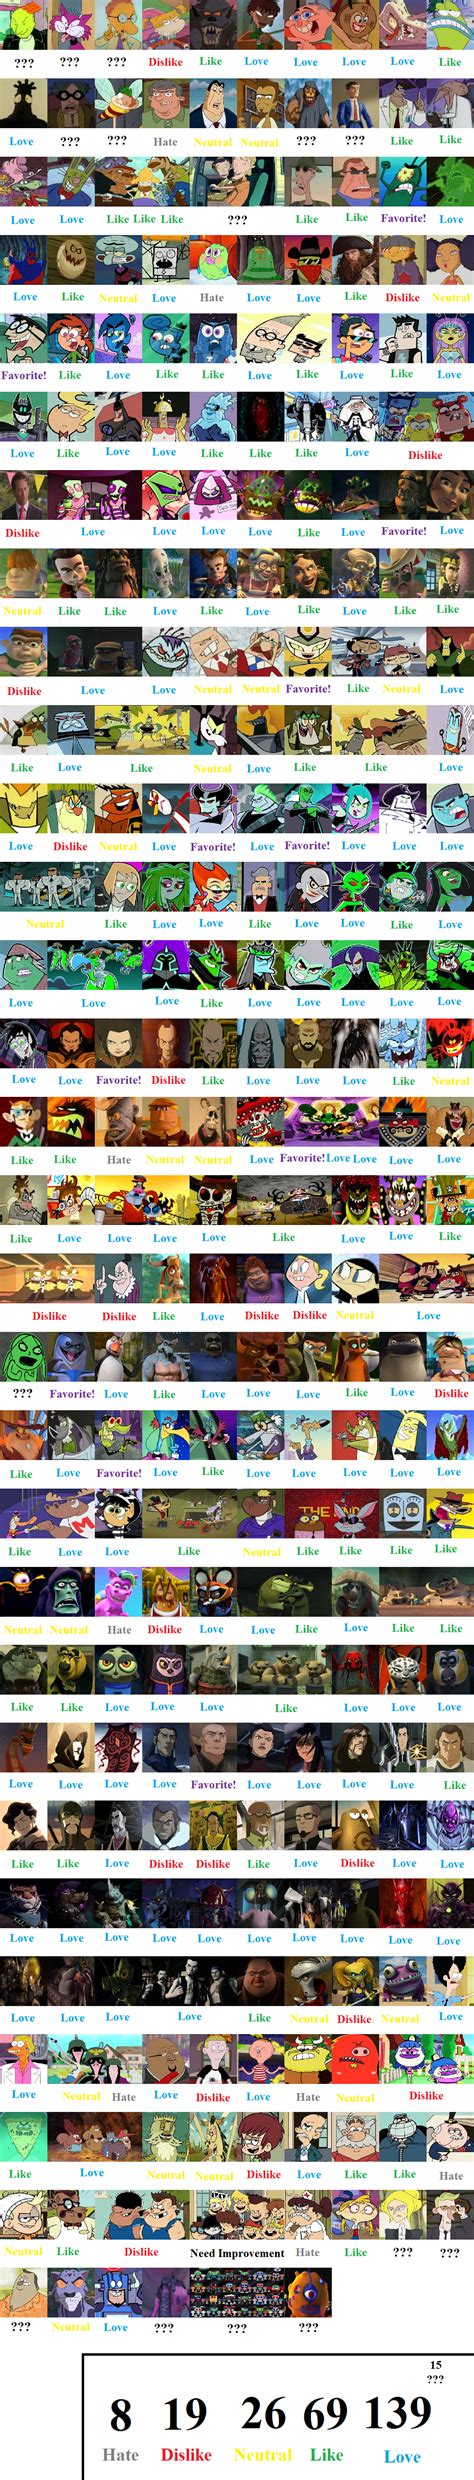 Nicktoons Antagonists Scorecard By Mranimatedtoon On Deviantart